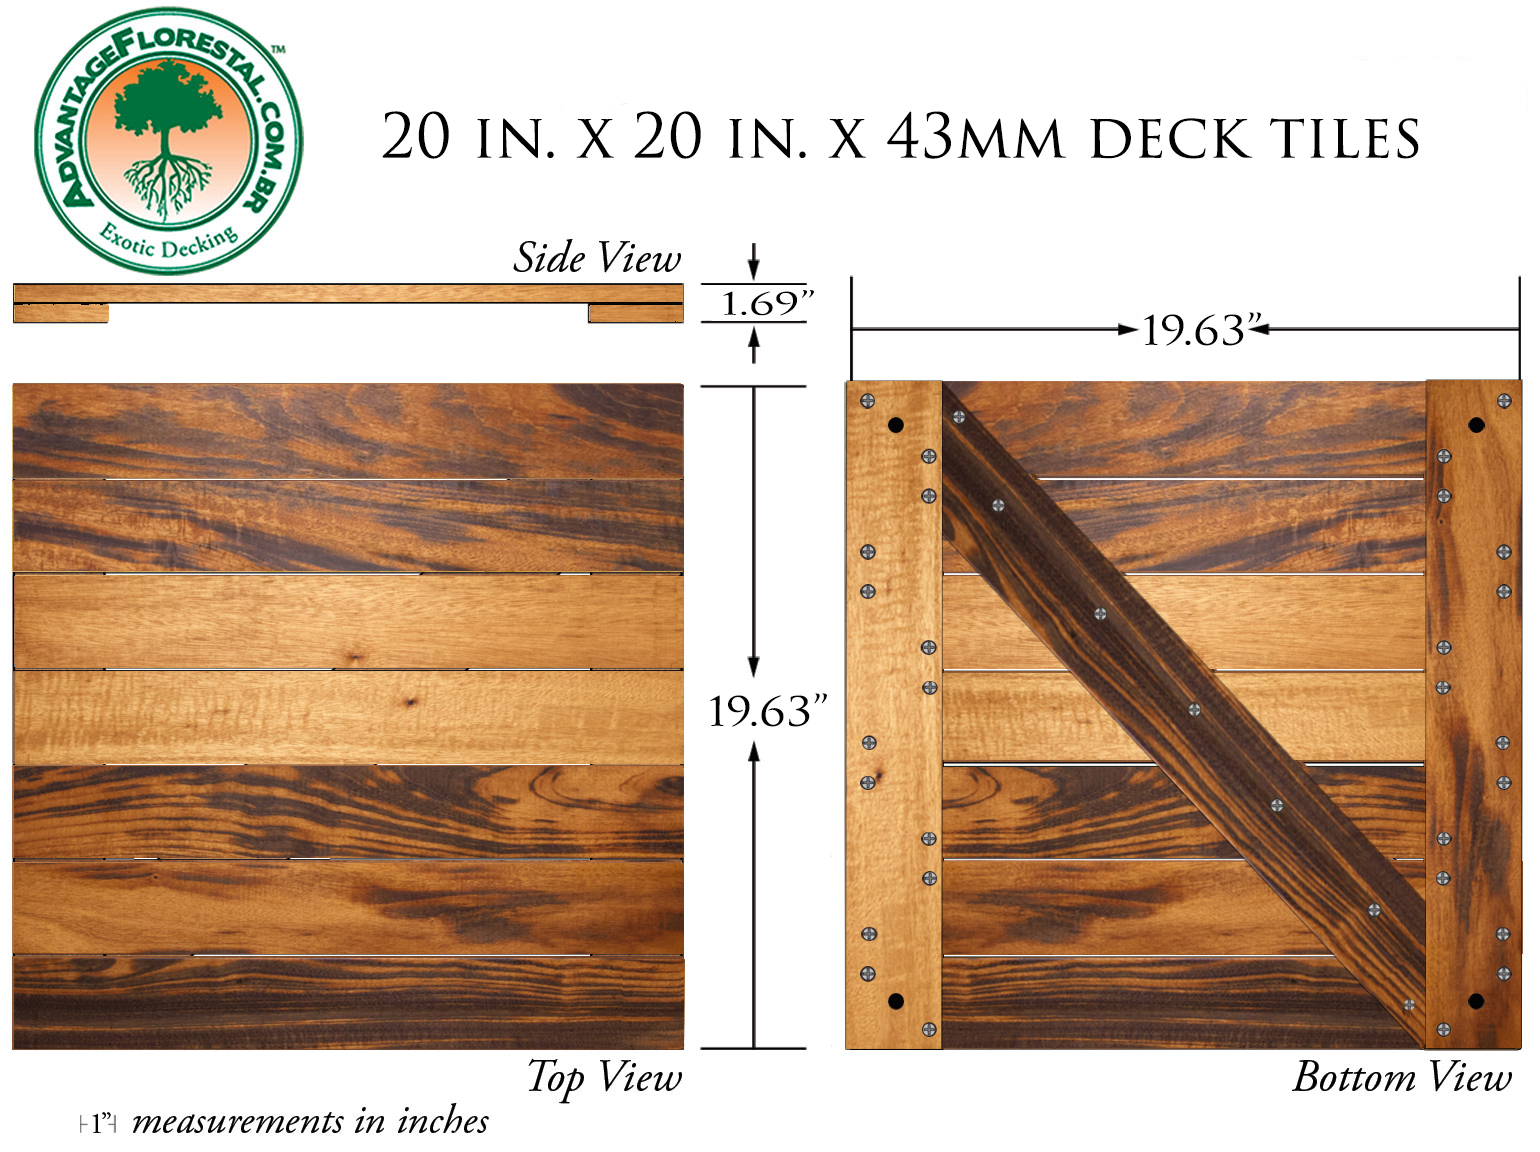 Tigerwood Deck Tile 20 in. x 20 in. x 43mm